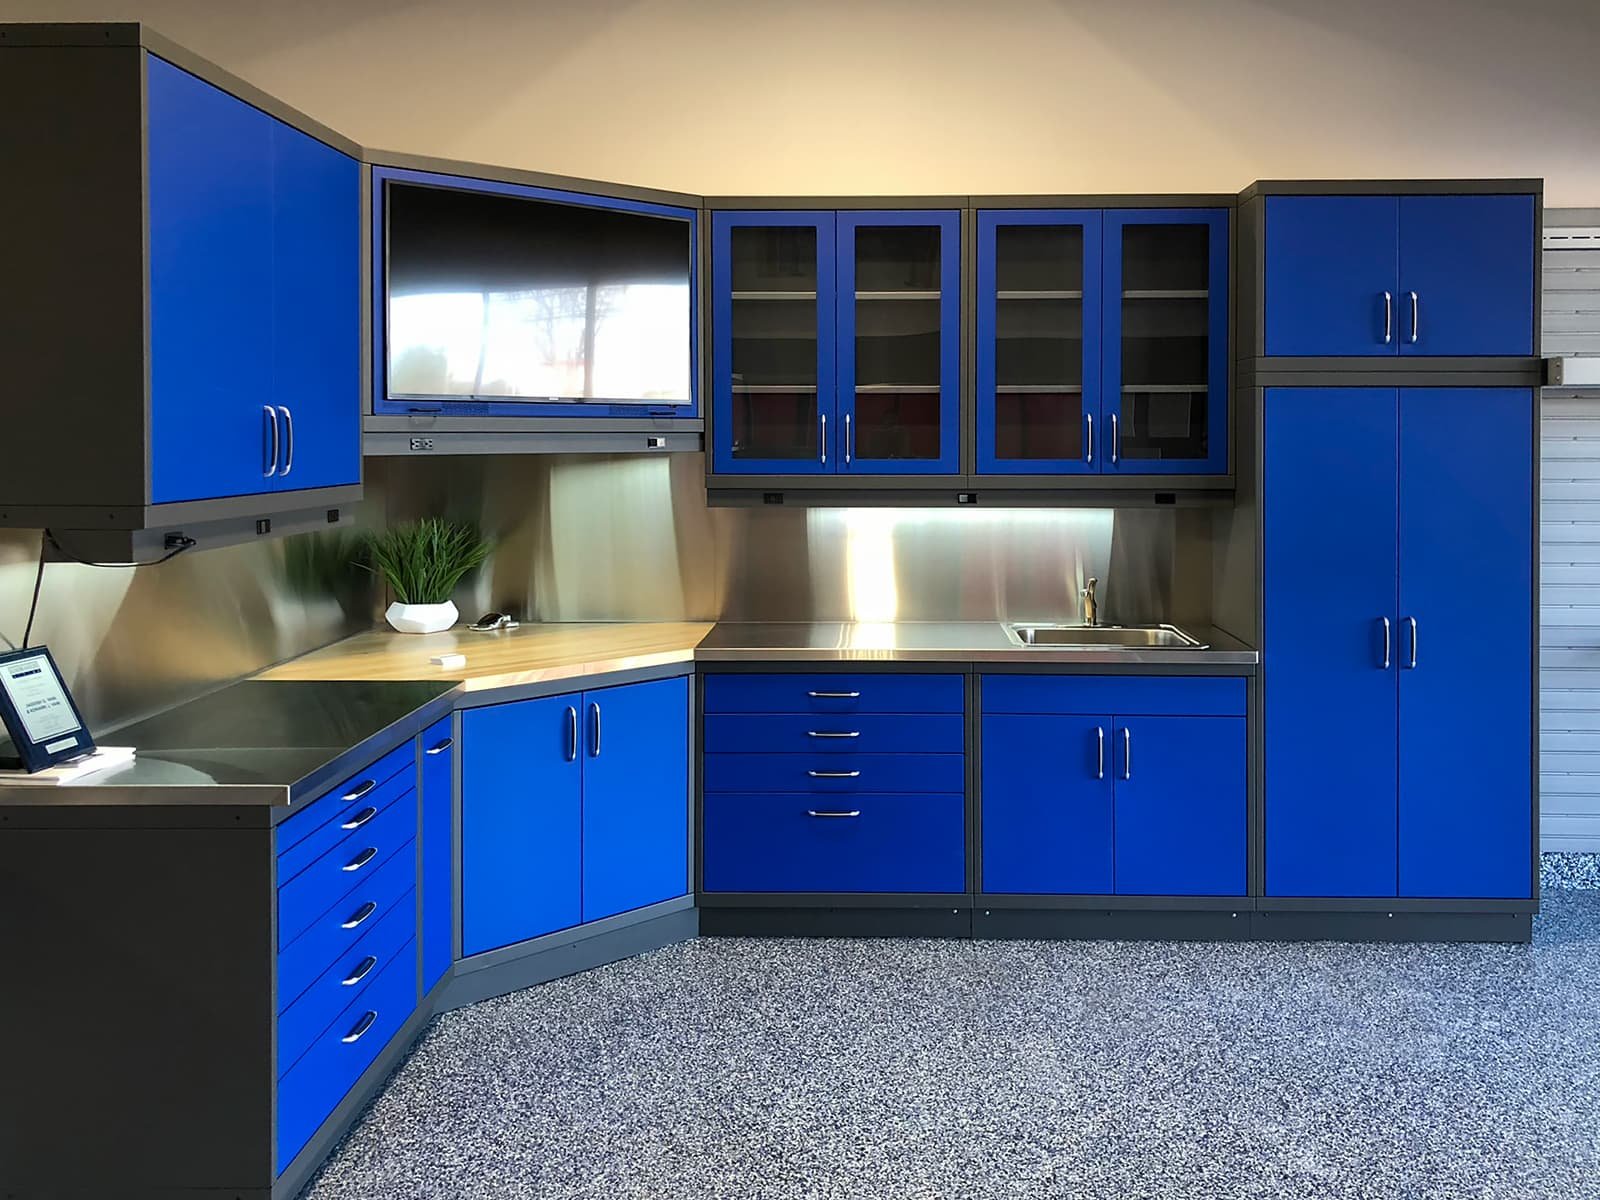 xgarage-living-detroit-blue-garage-cabinets.jpg.pagespeed.ic.OnM1aA3TJw